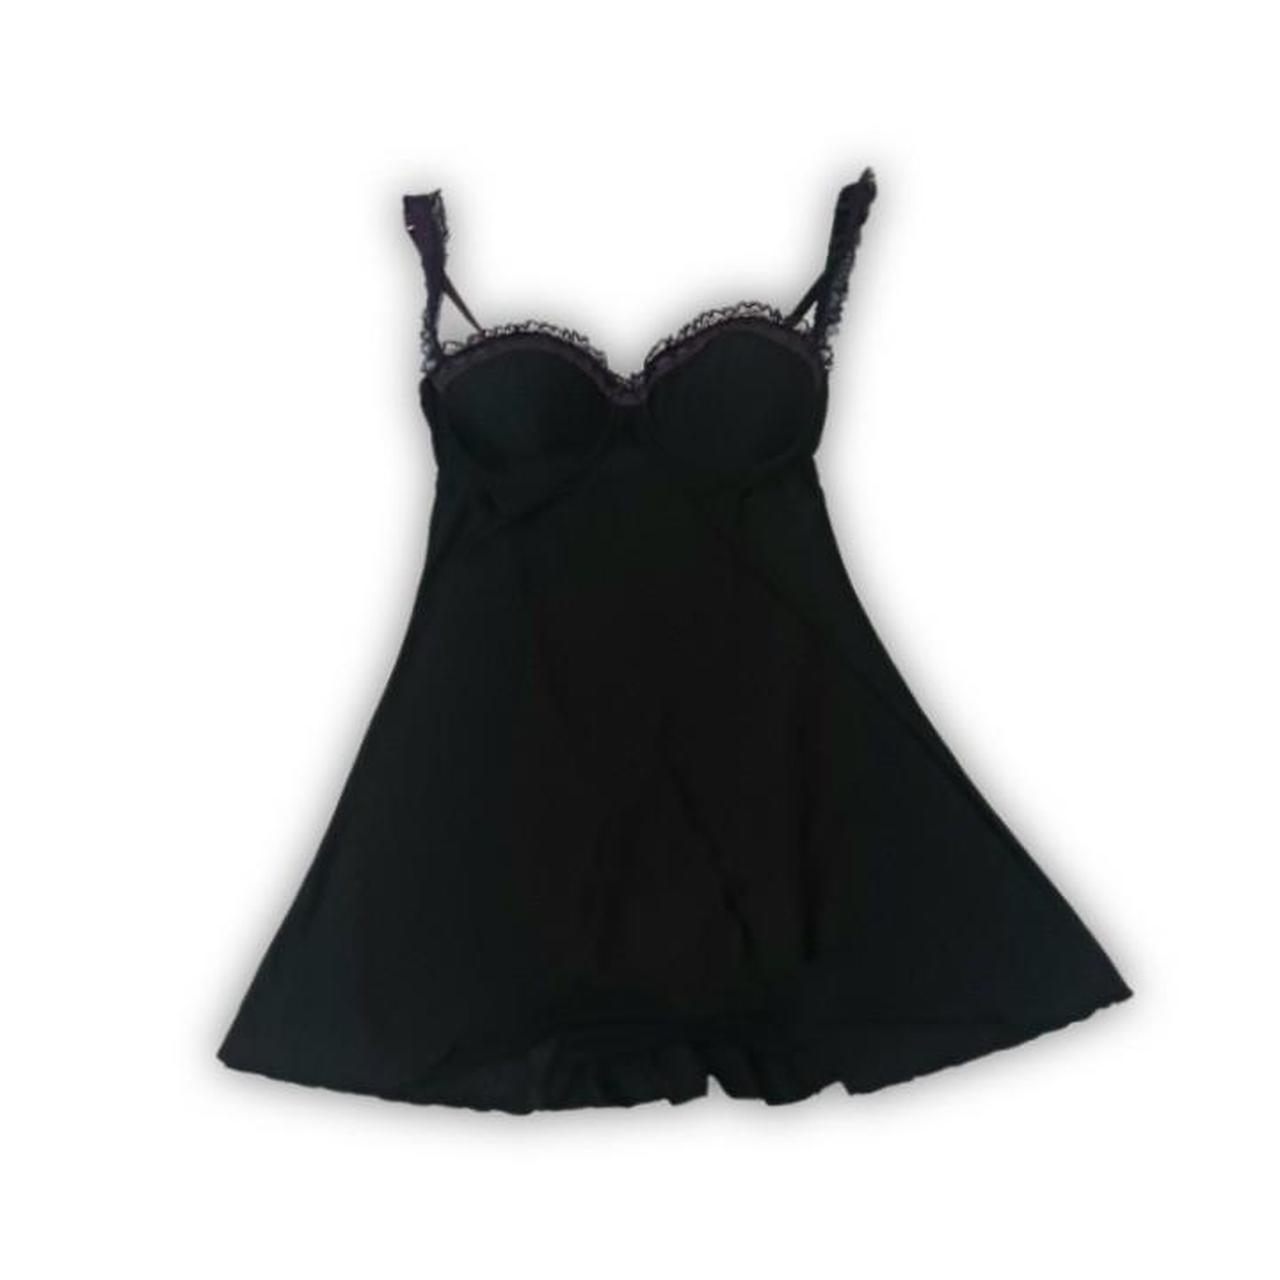 Black and purple lingerie top Size: M 36C Brand:... - Depop